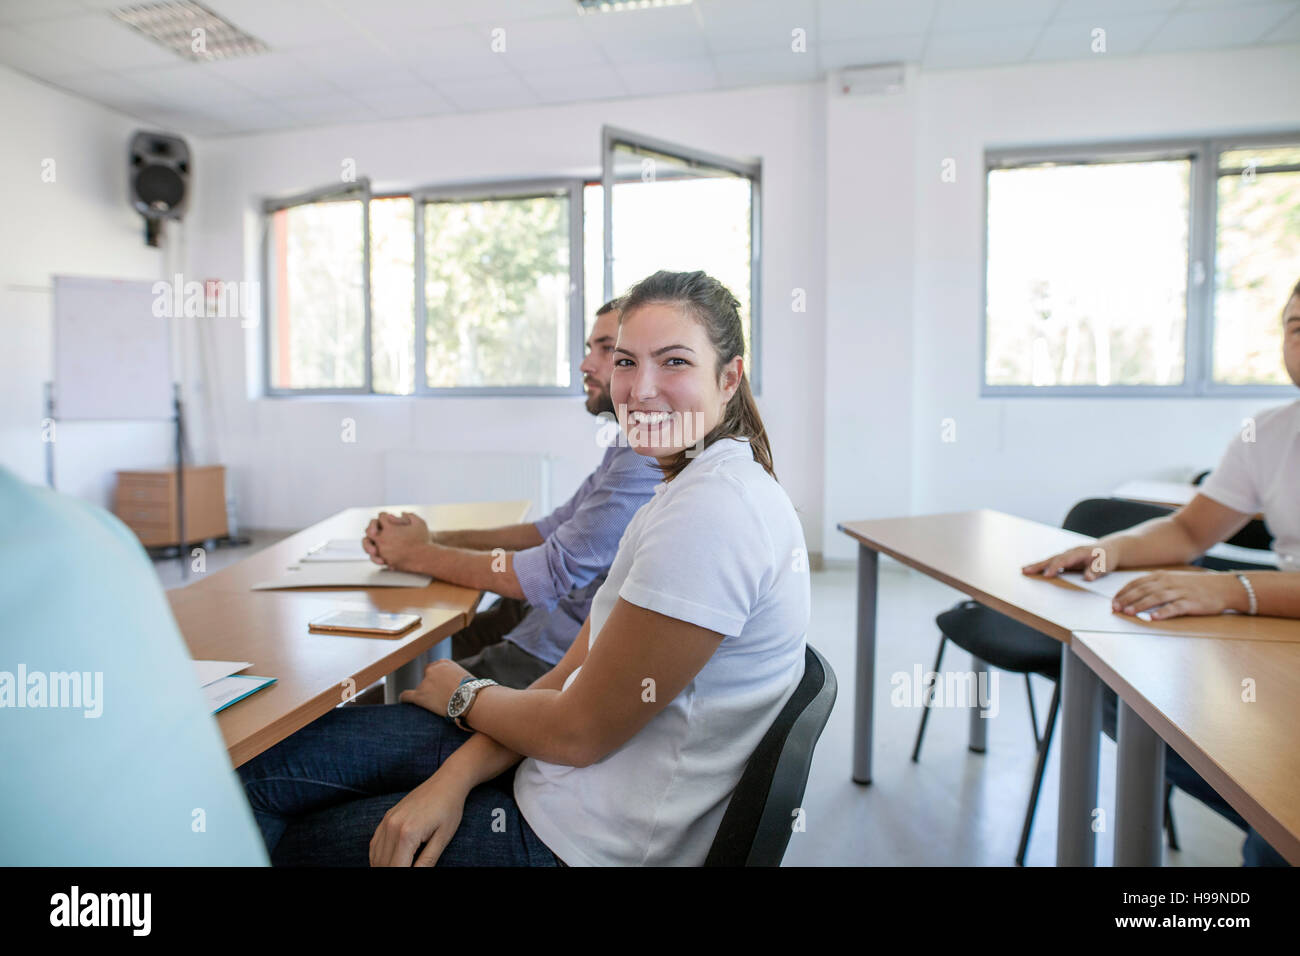 Lächelnd Schüler im Kurs Stockfoto